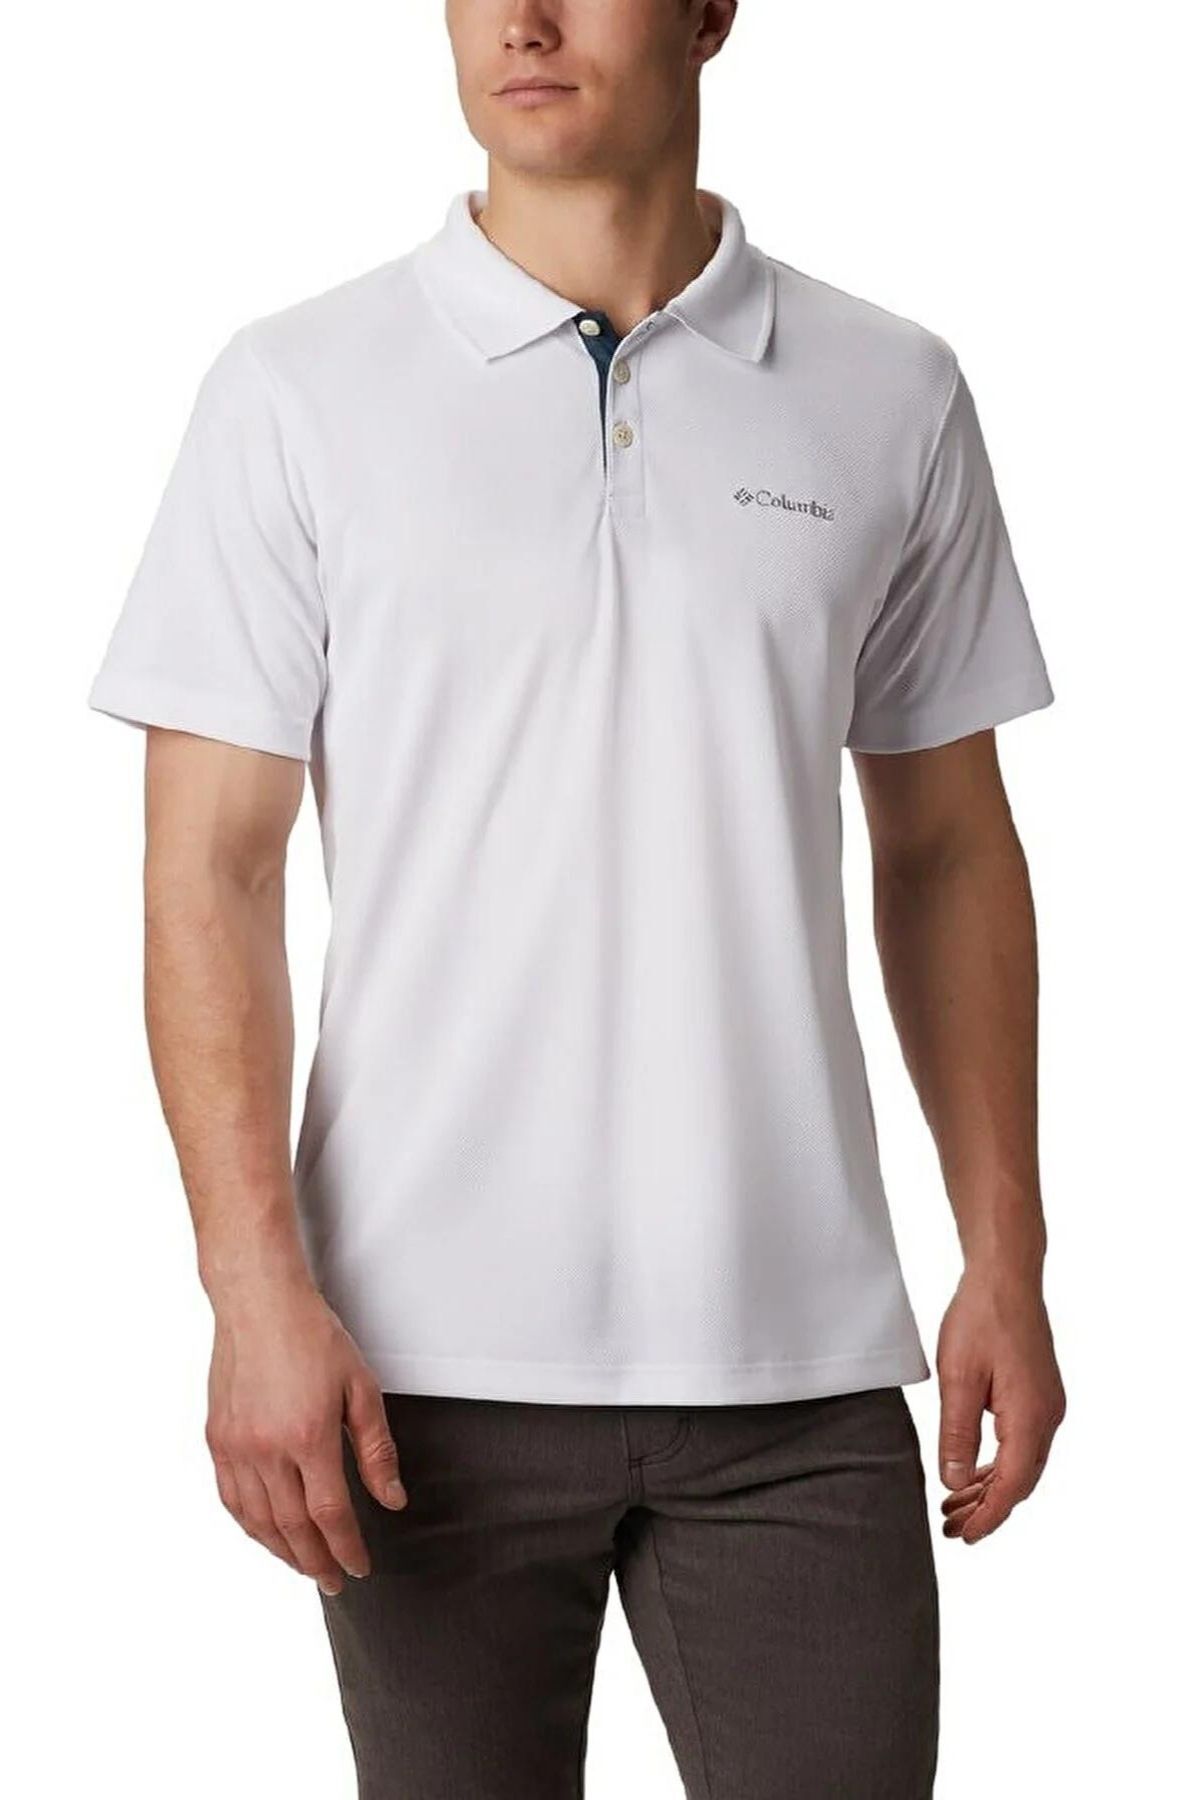 Columbia Erkek Beyaz T-shirt 1772051100-100